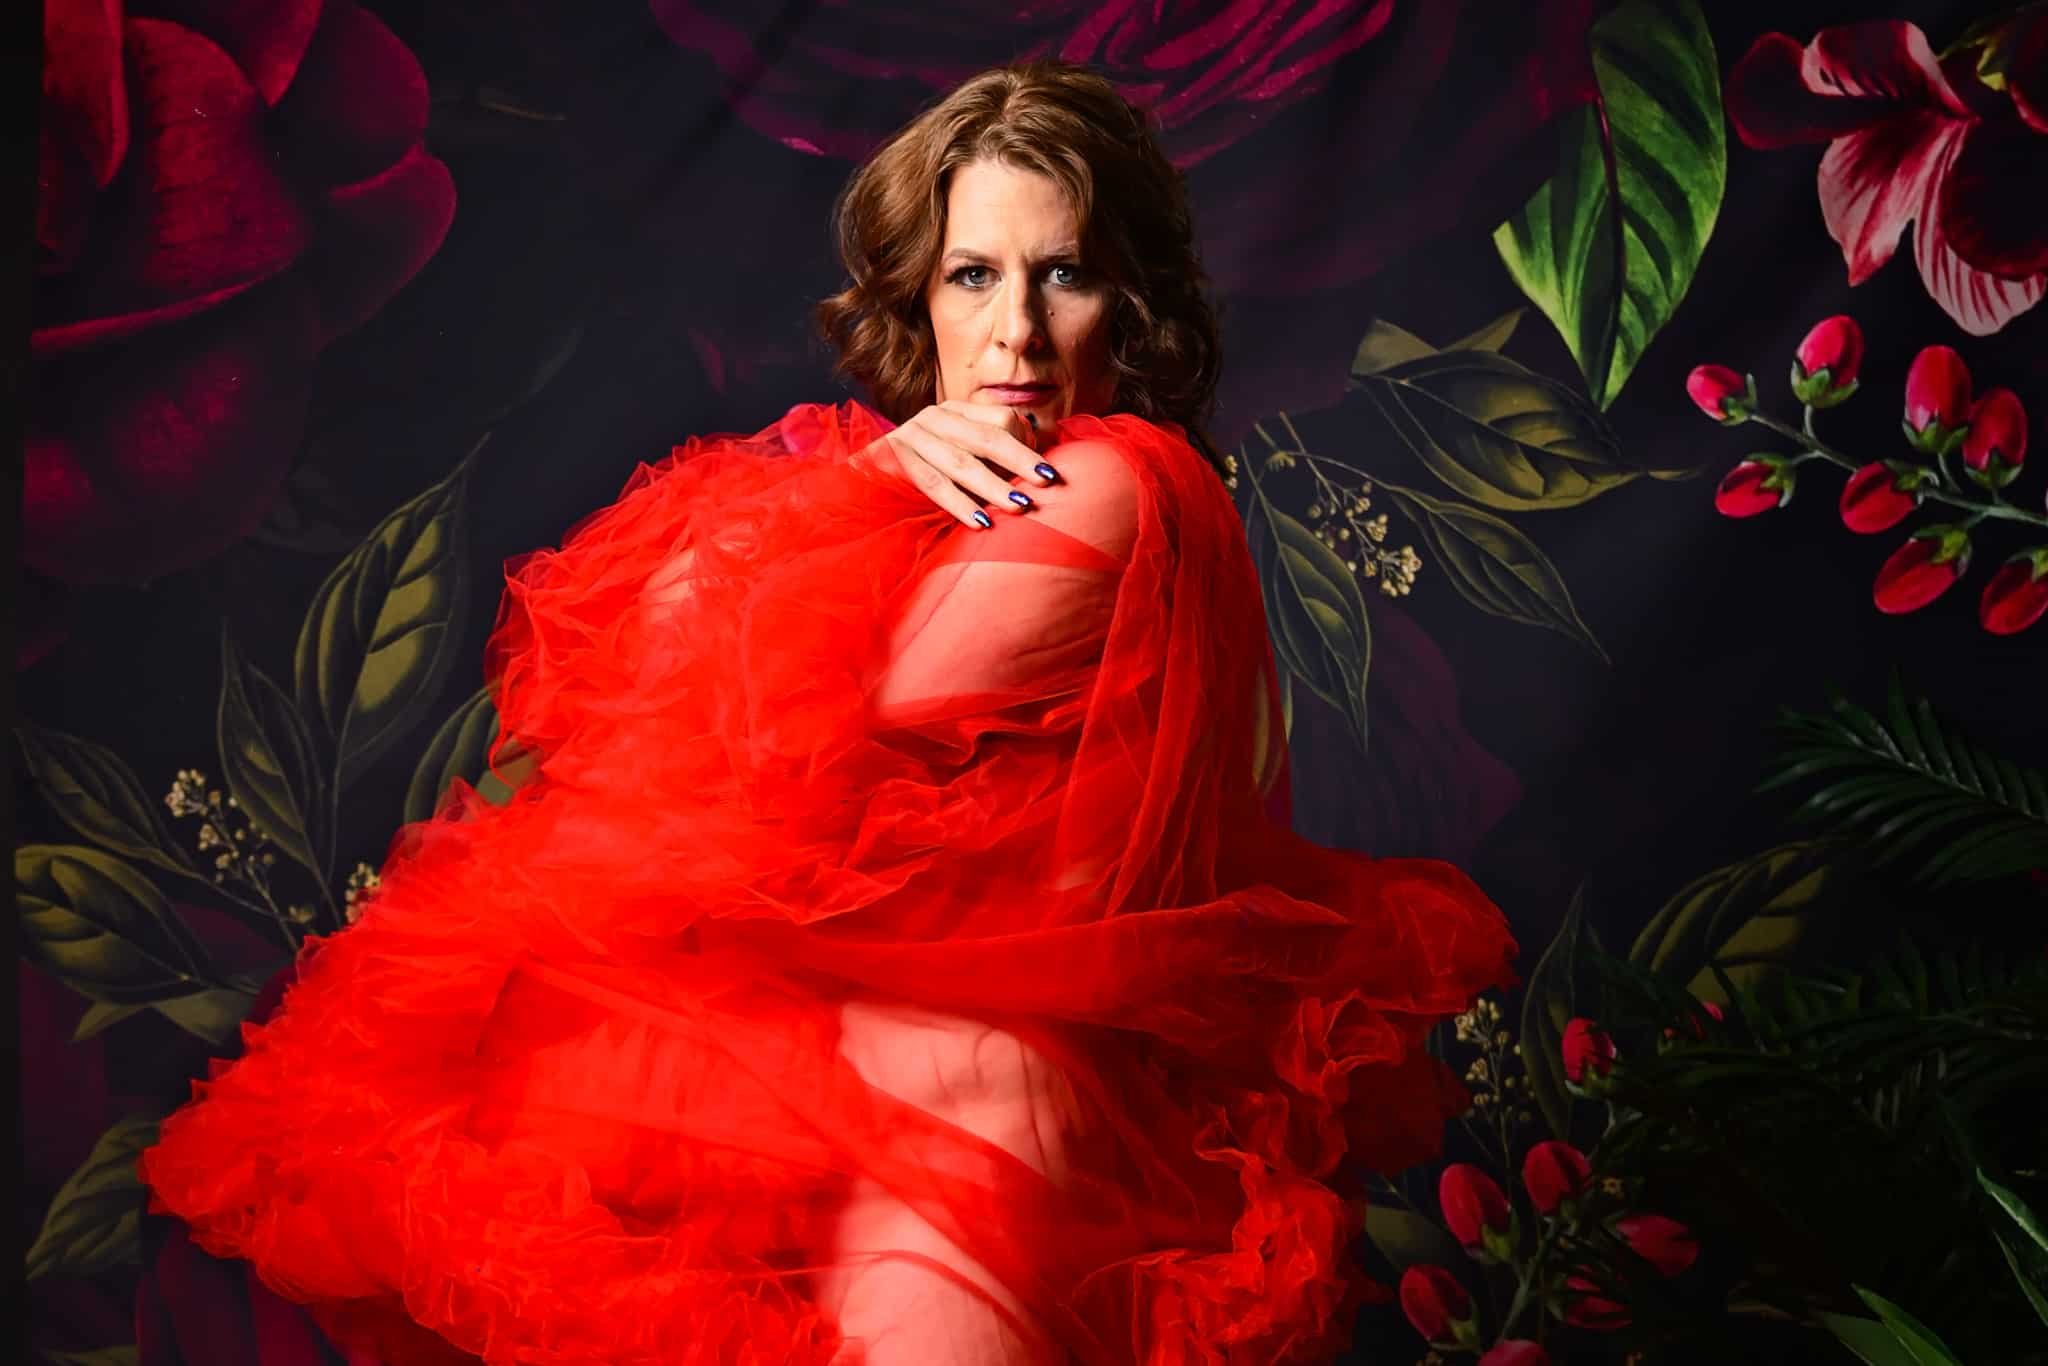 transwoman-boudoir-red-robe.jpg